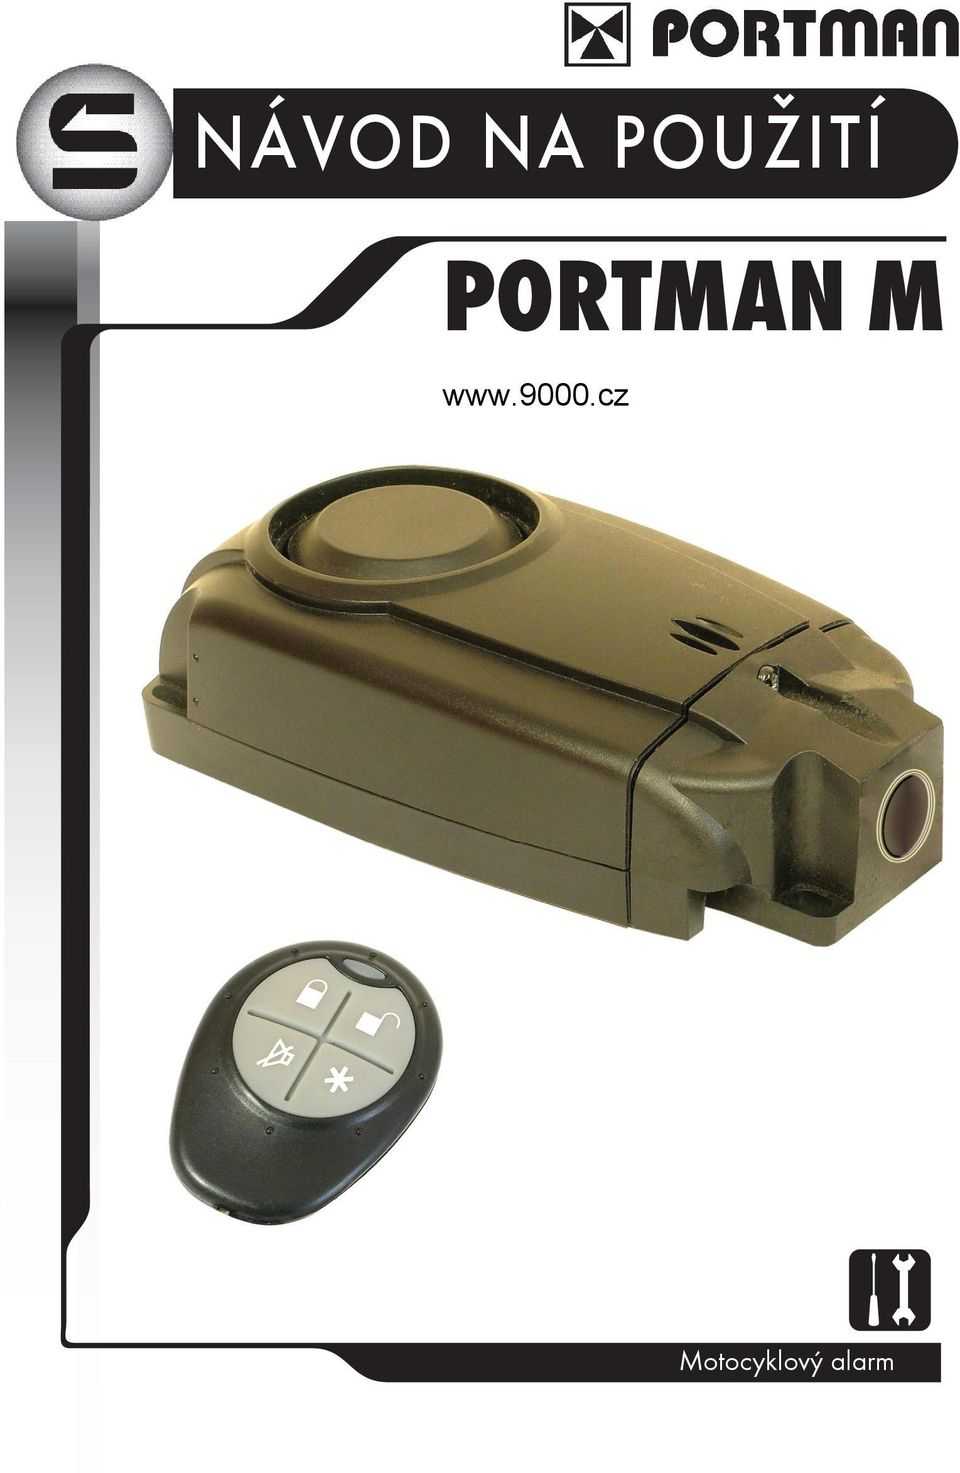 PORTMAN M www.